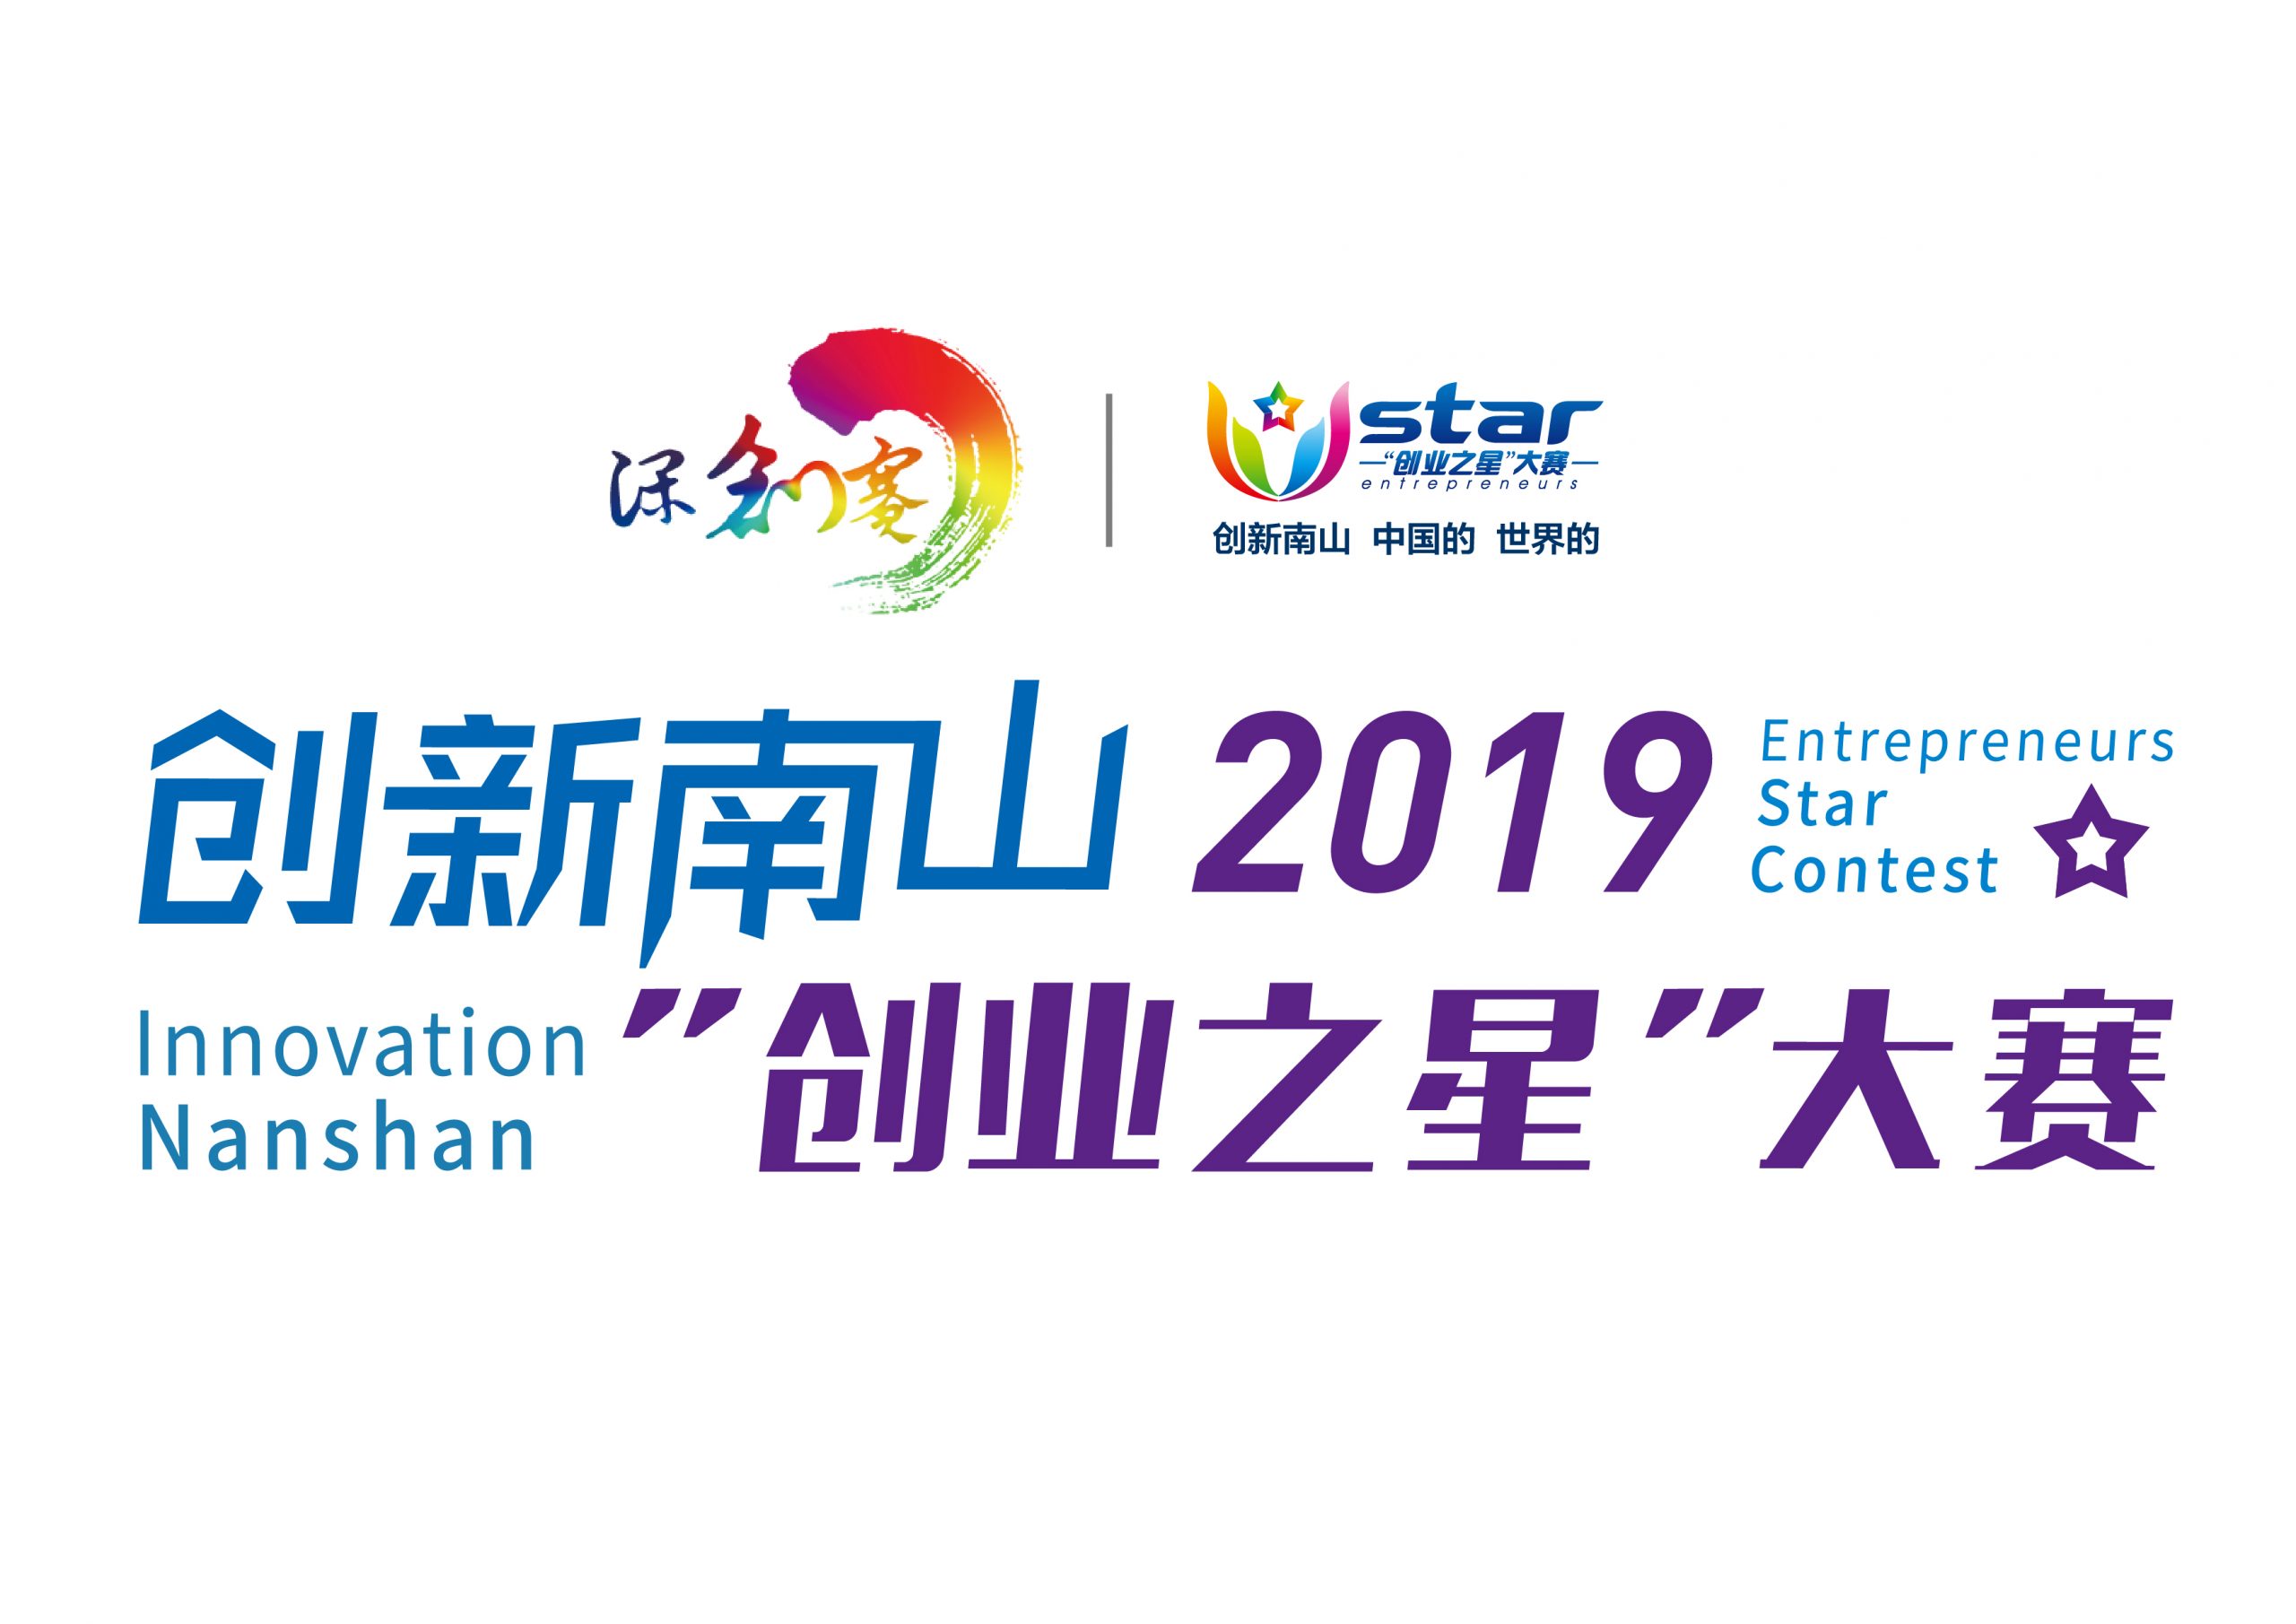 The 2019 Innovation Nanshan Entrepreneurship Star Contest Shibuya